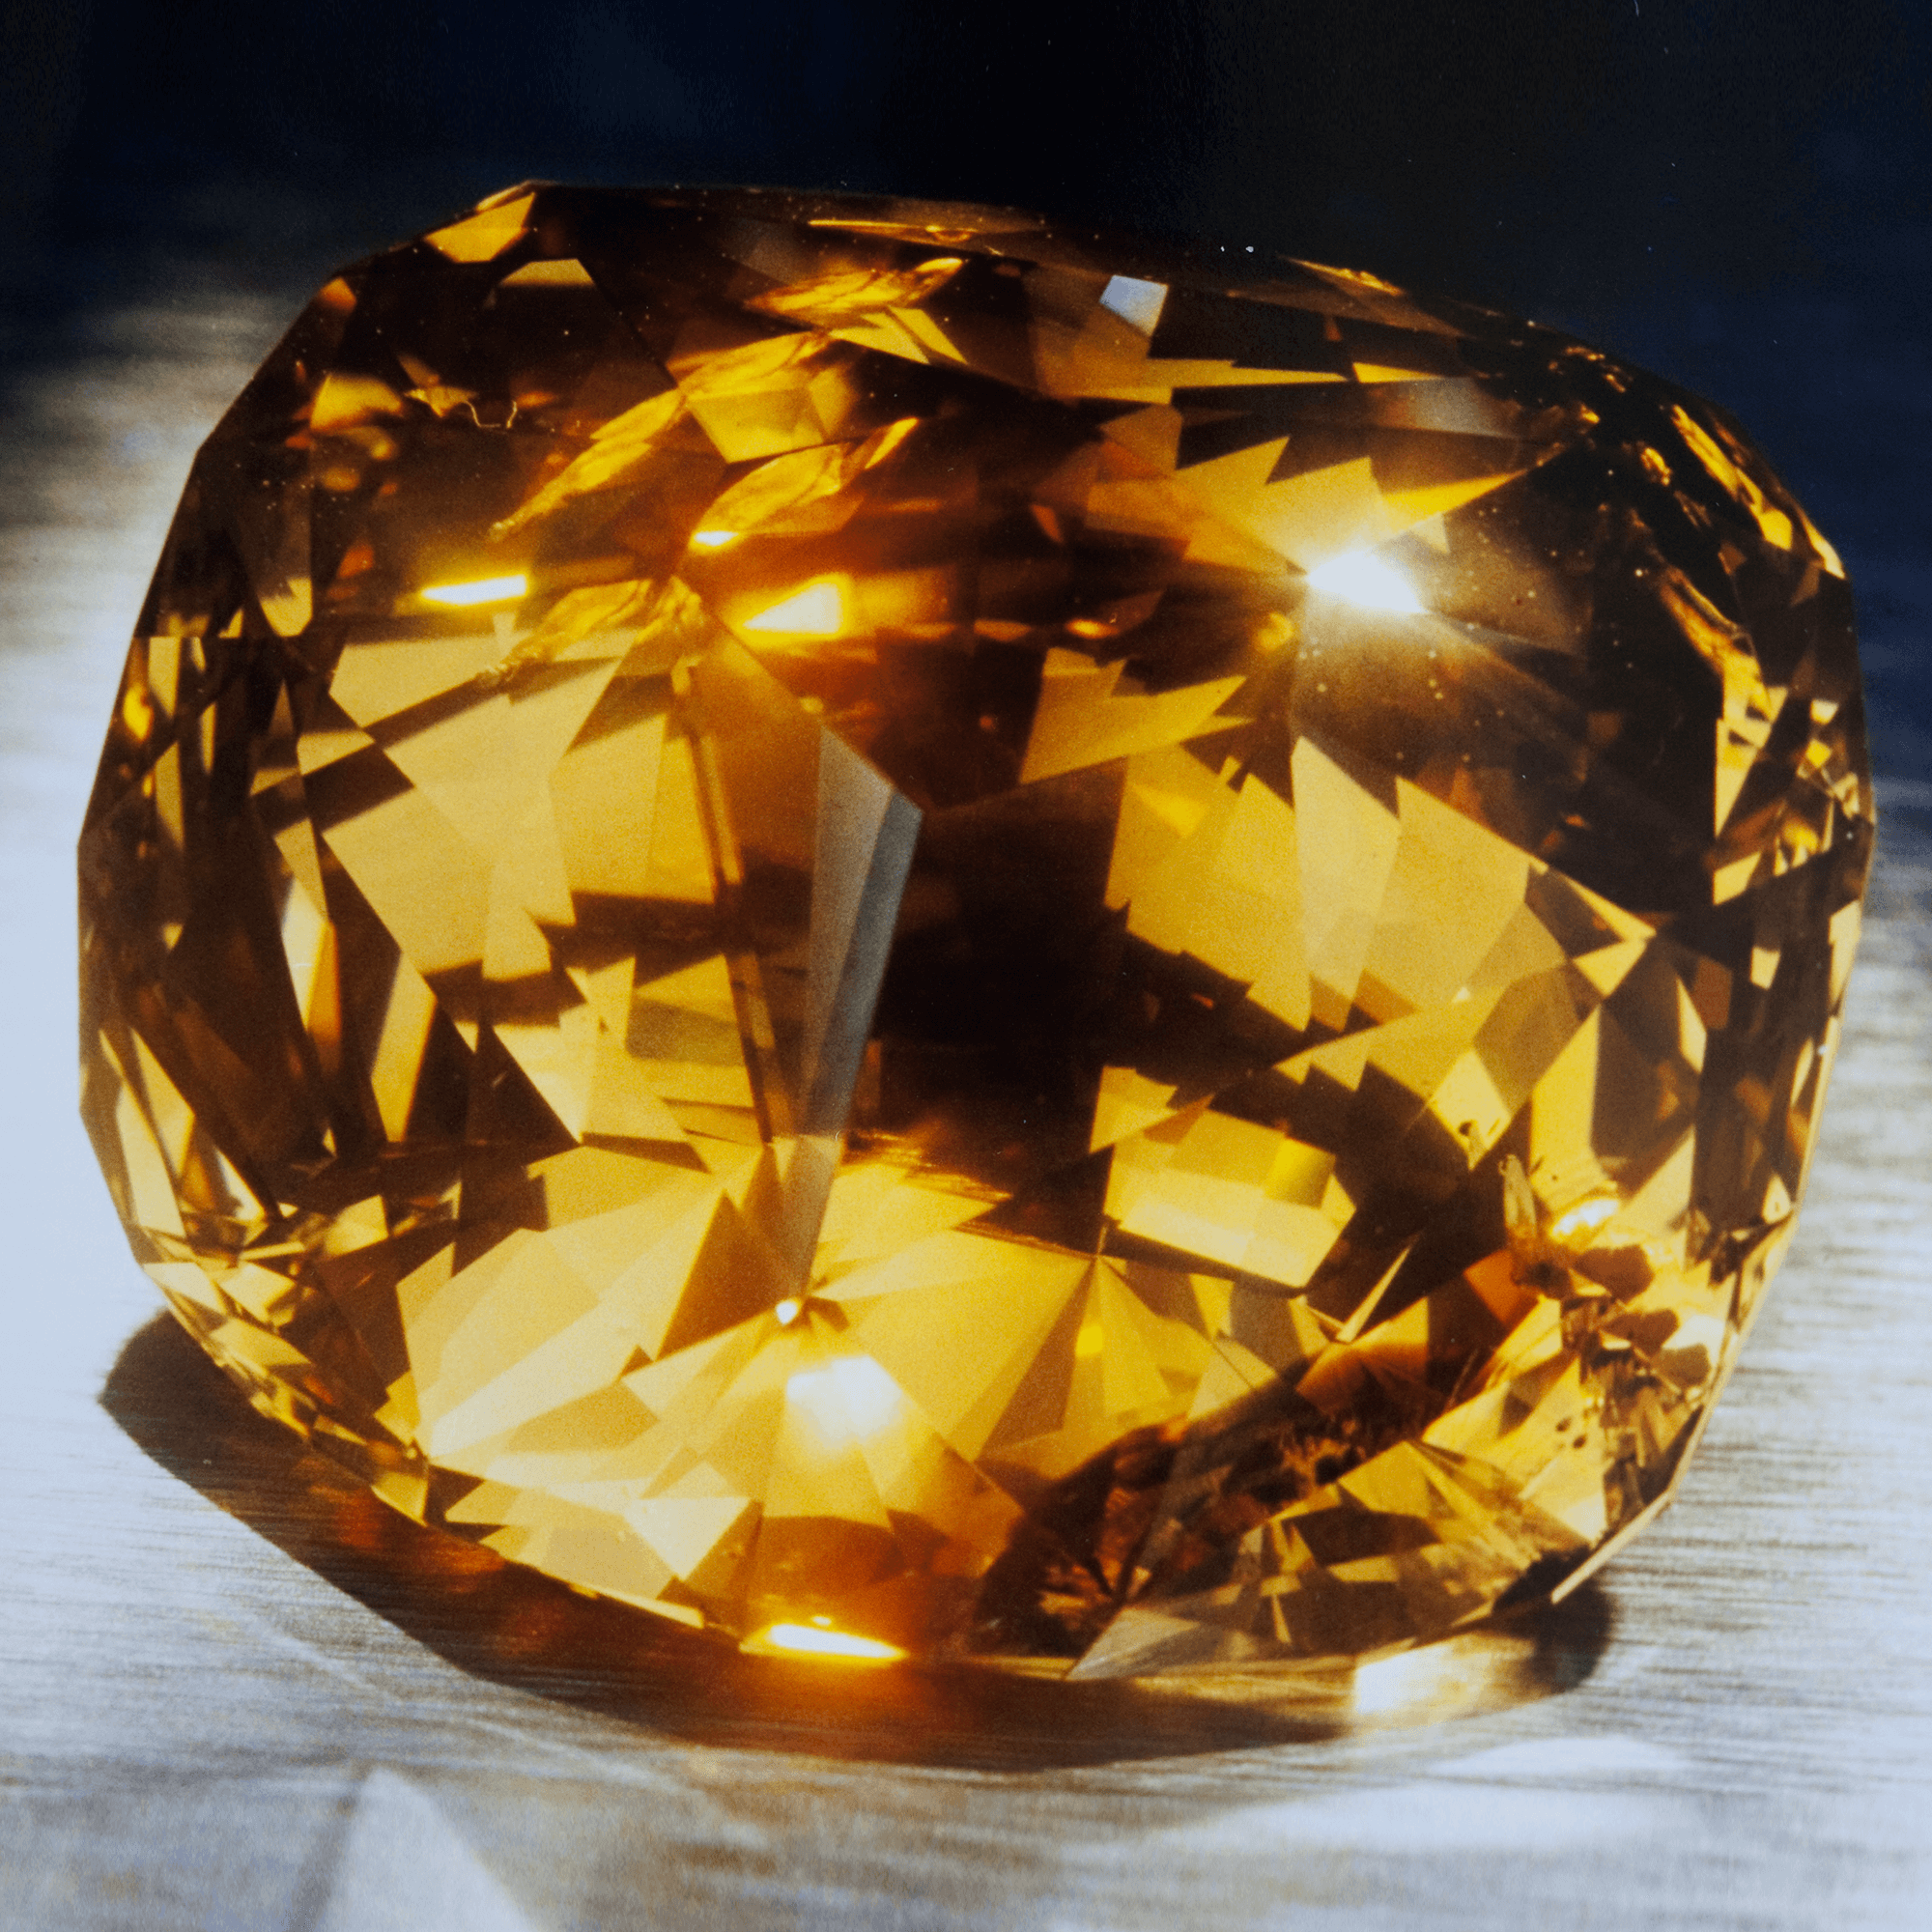 The Golden Jubilee Diamond: An over 540-carat "fire-rose cushion cut" yellowish-brown diamond 